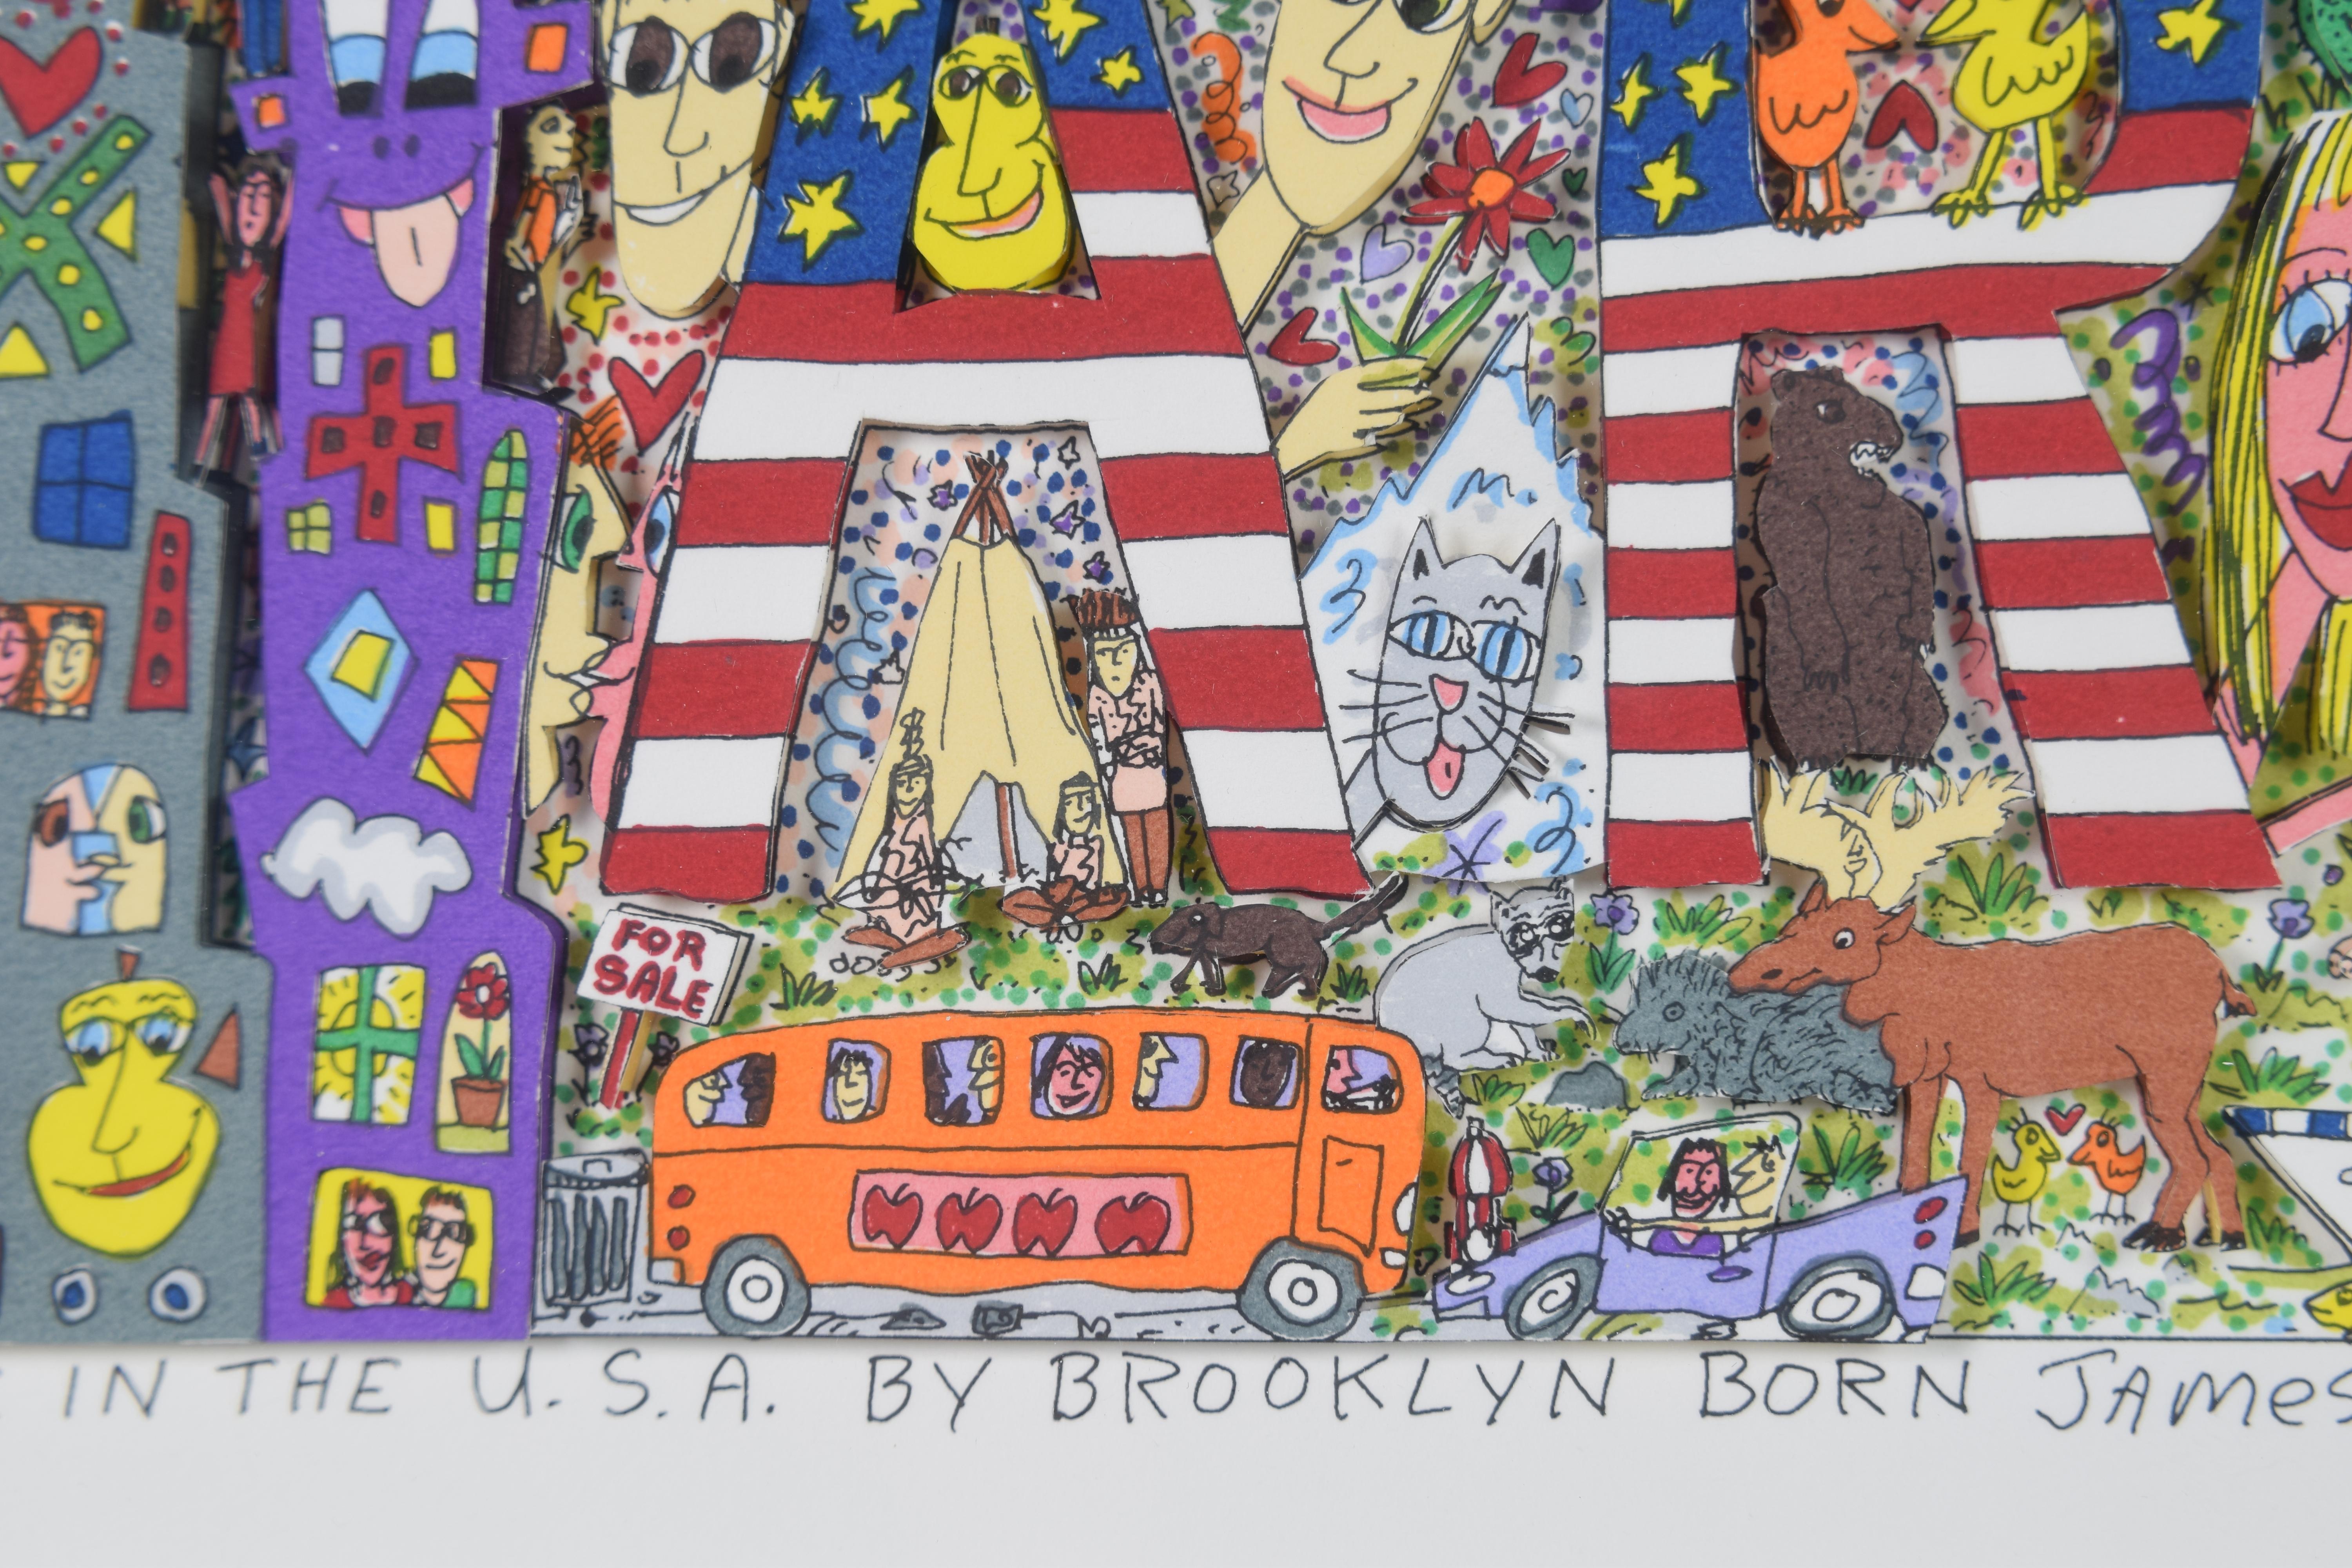 Made in the U.S.A. by Brooklyn born James Rizzi - Pop Art, 3D, America 7